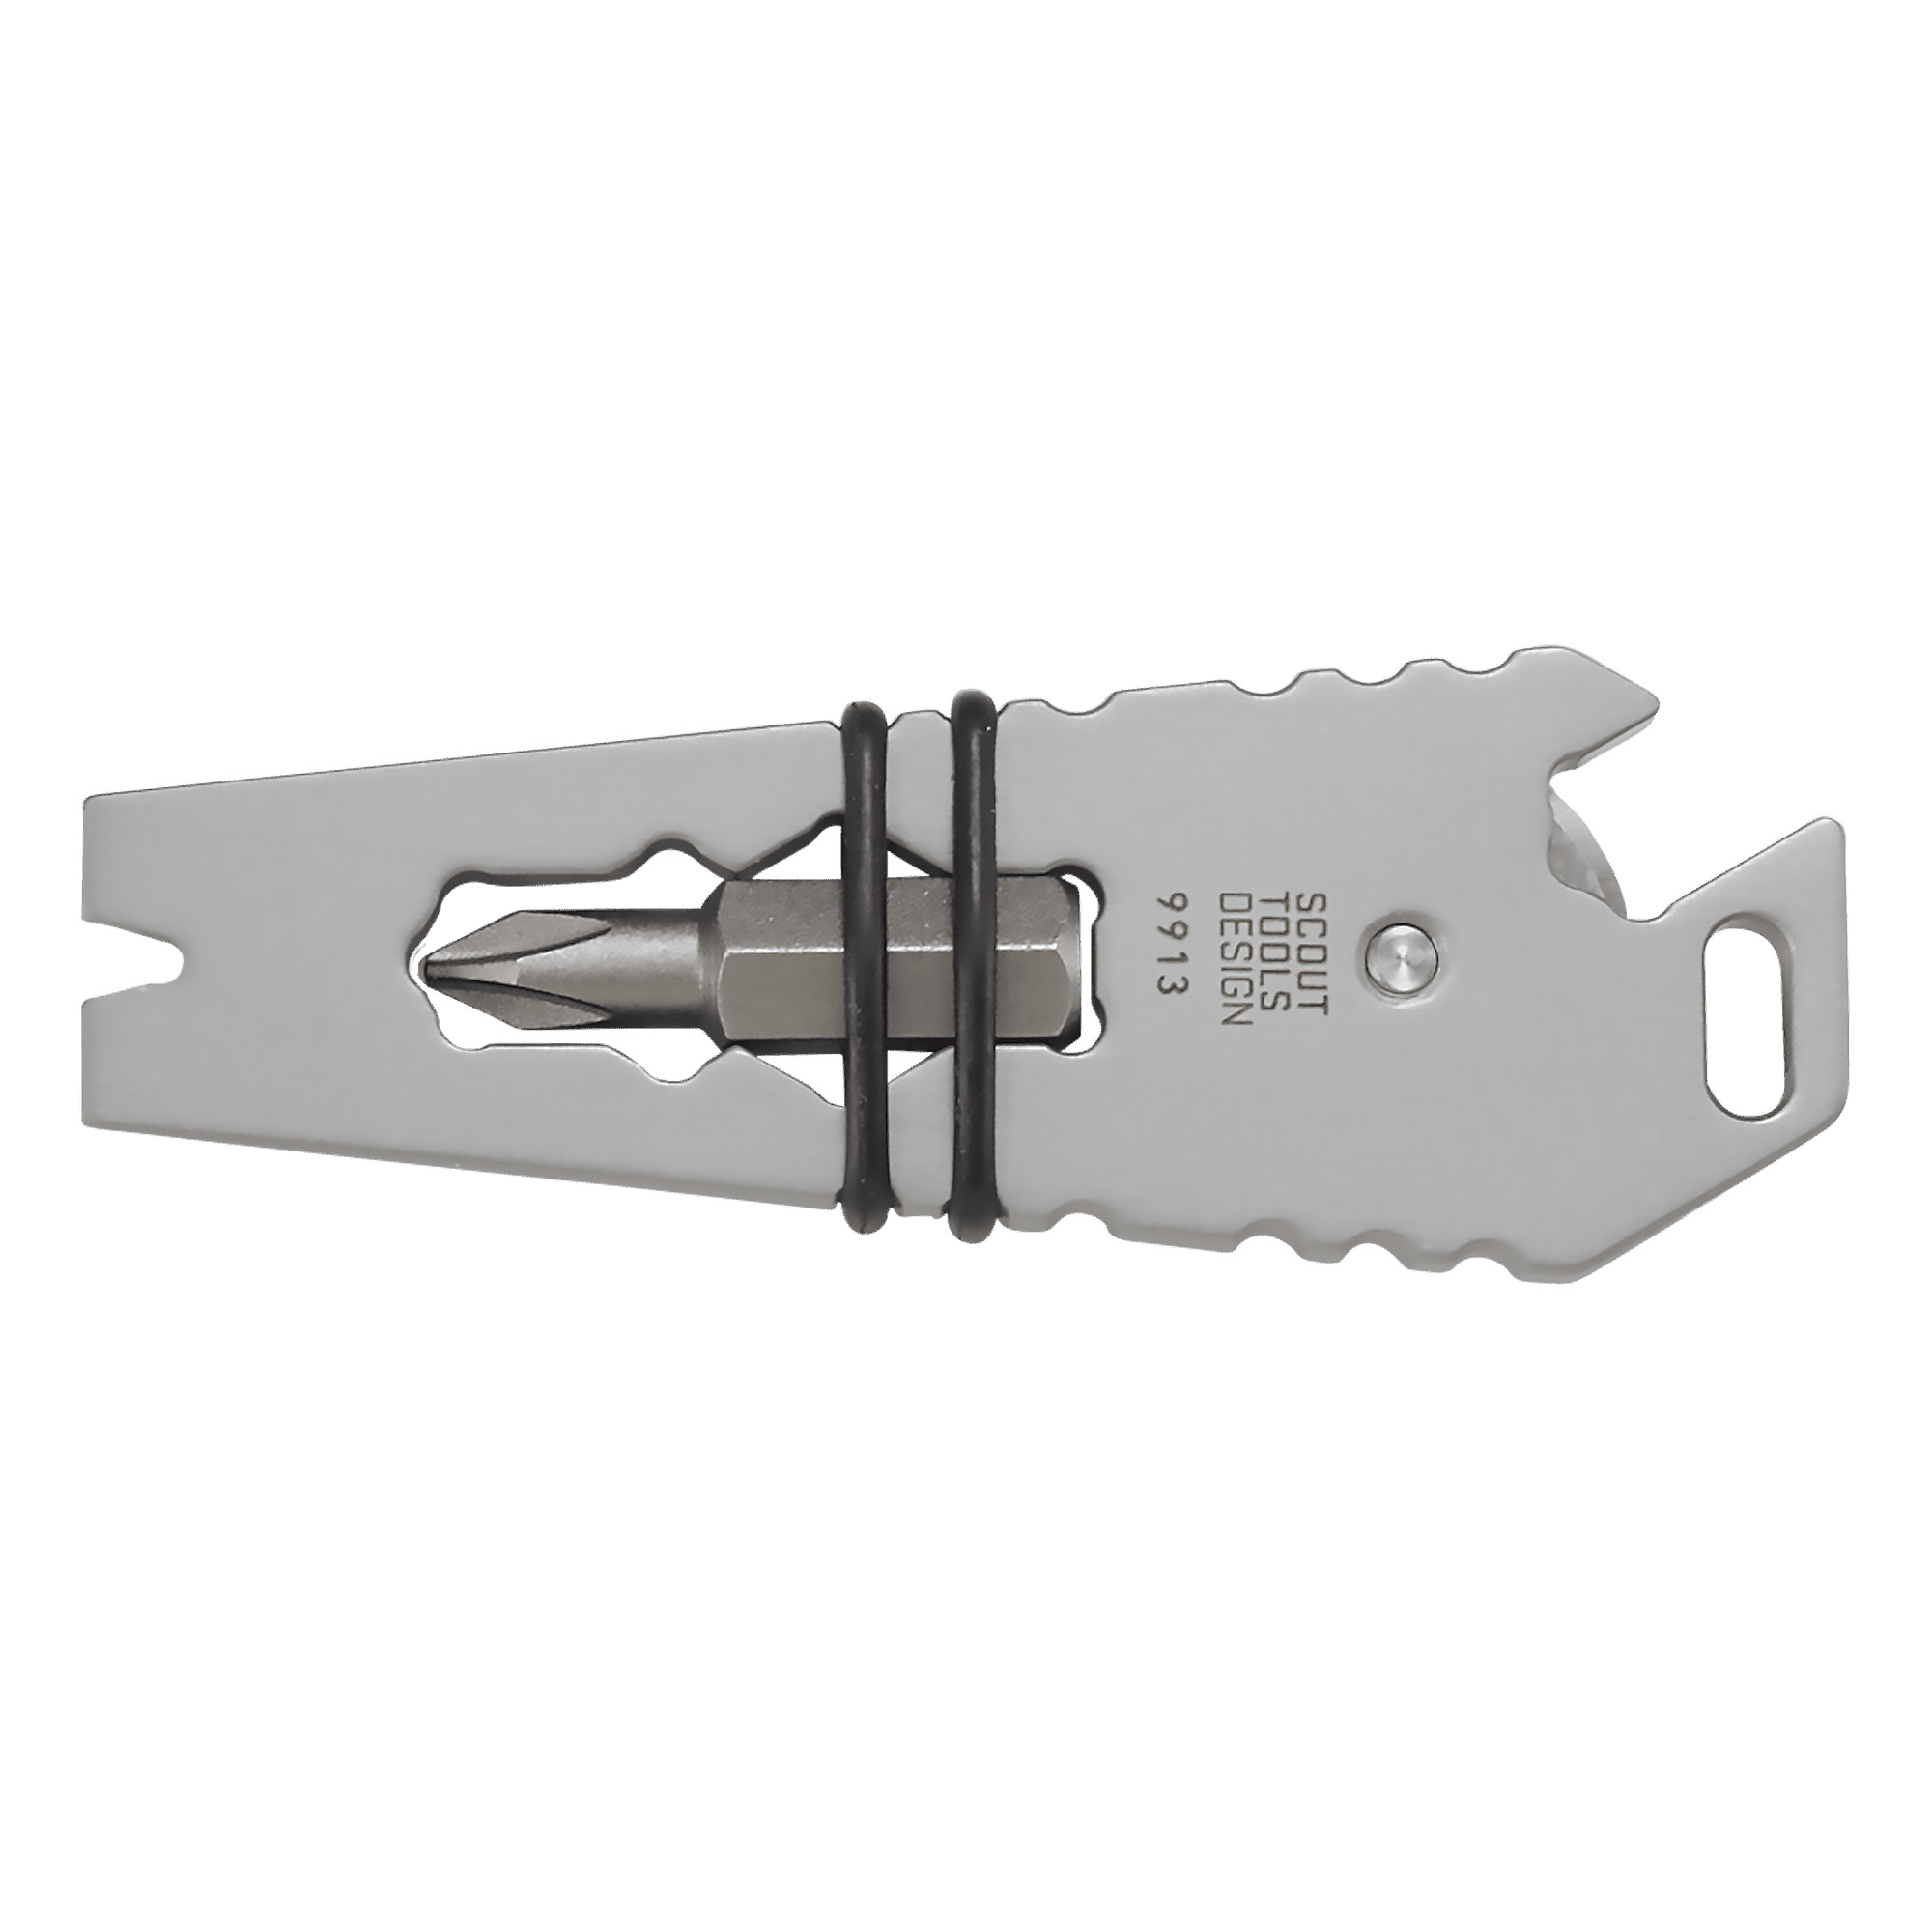 Crkt Pry Cutter Keychain Tool 2.61"